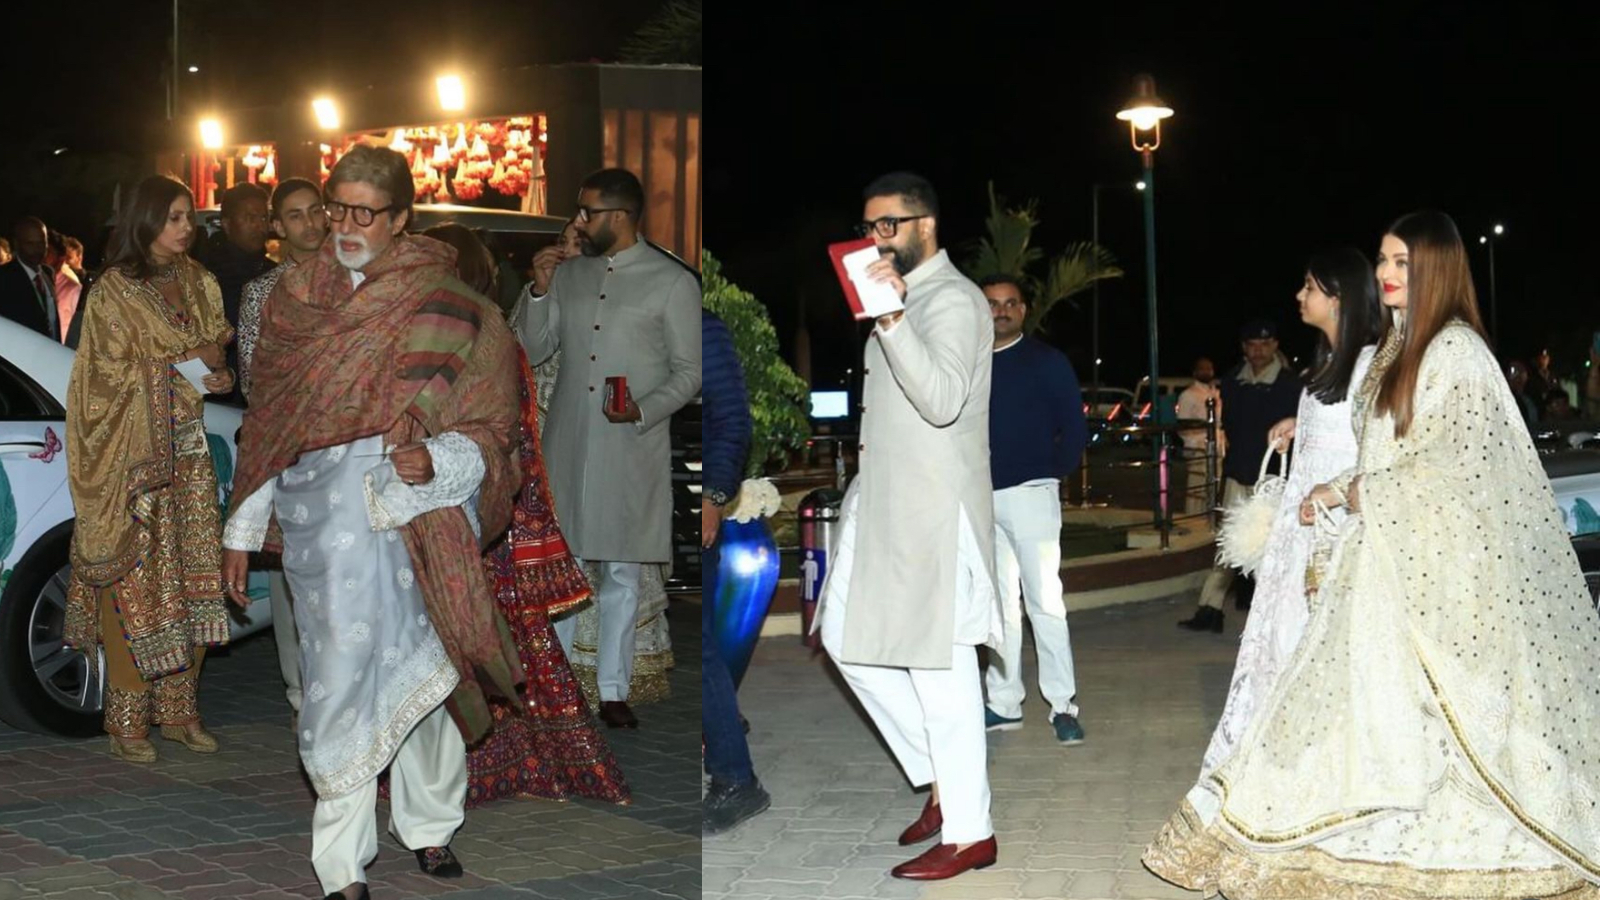 When Aishwarya Rai and Abhishek Bachchan arrive from Jamnagar, Amitabh Bachchan clutches Aaradhya’s hand. Keep an eye on